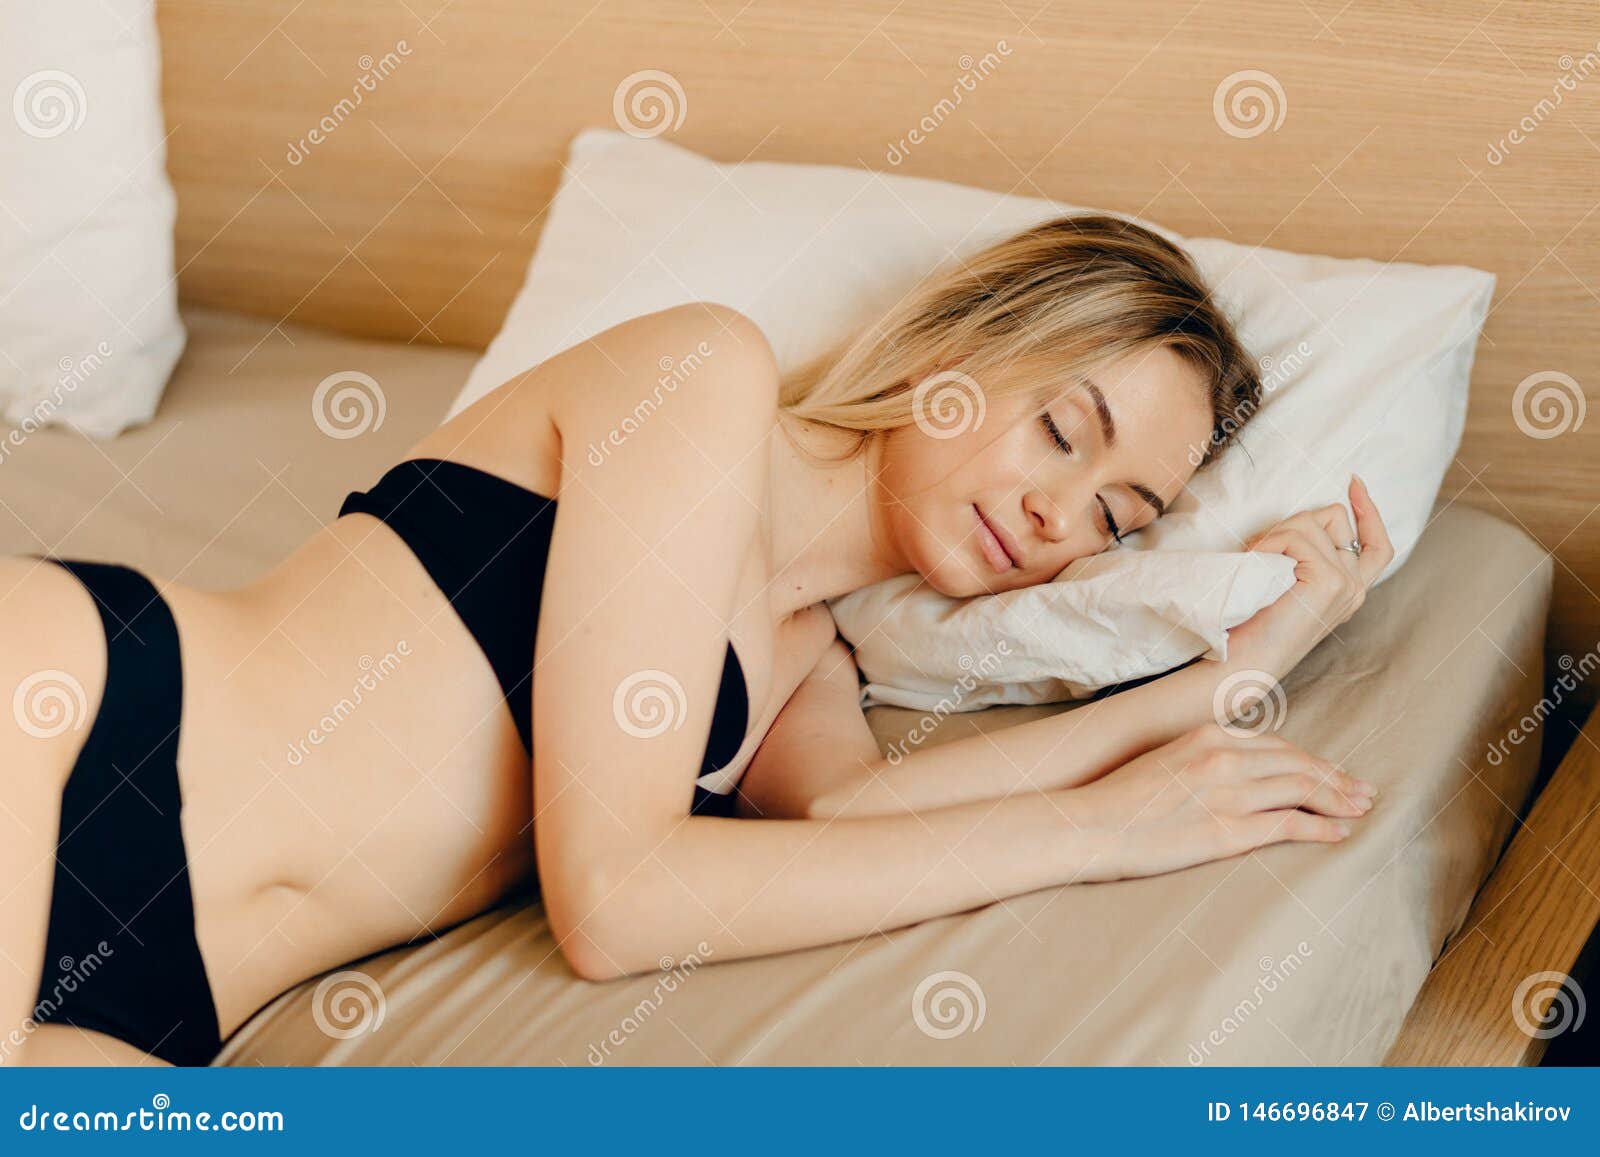 girl sleeping in underwear